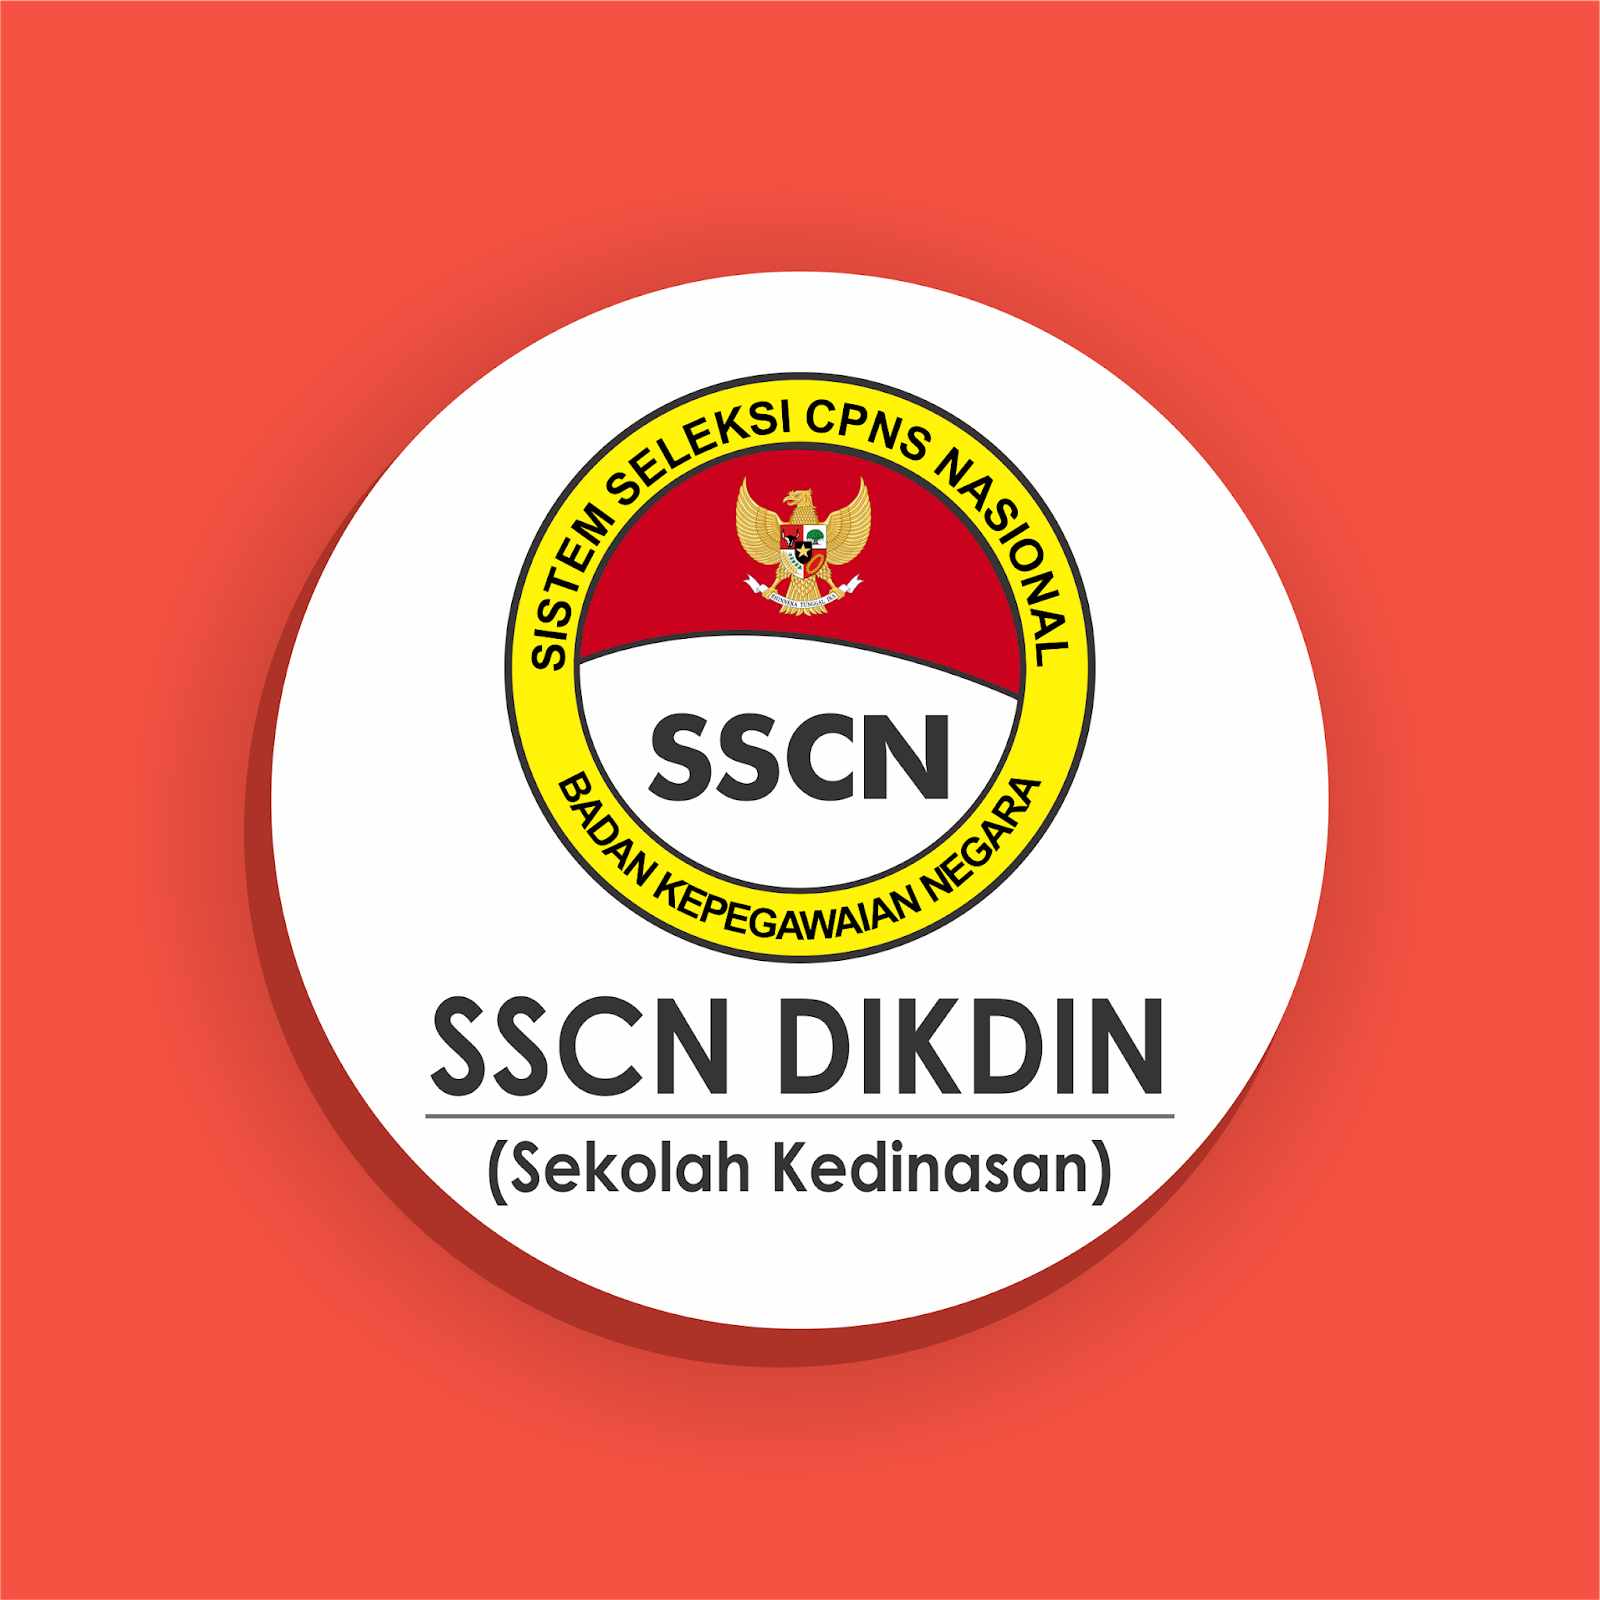 Sscn.bkn.go.id 2021 sekolah kedinasan